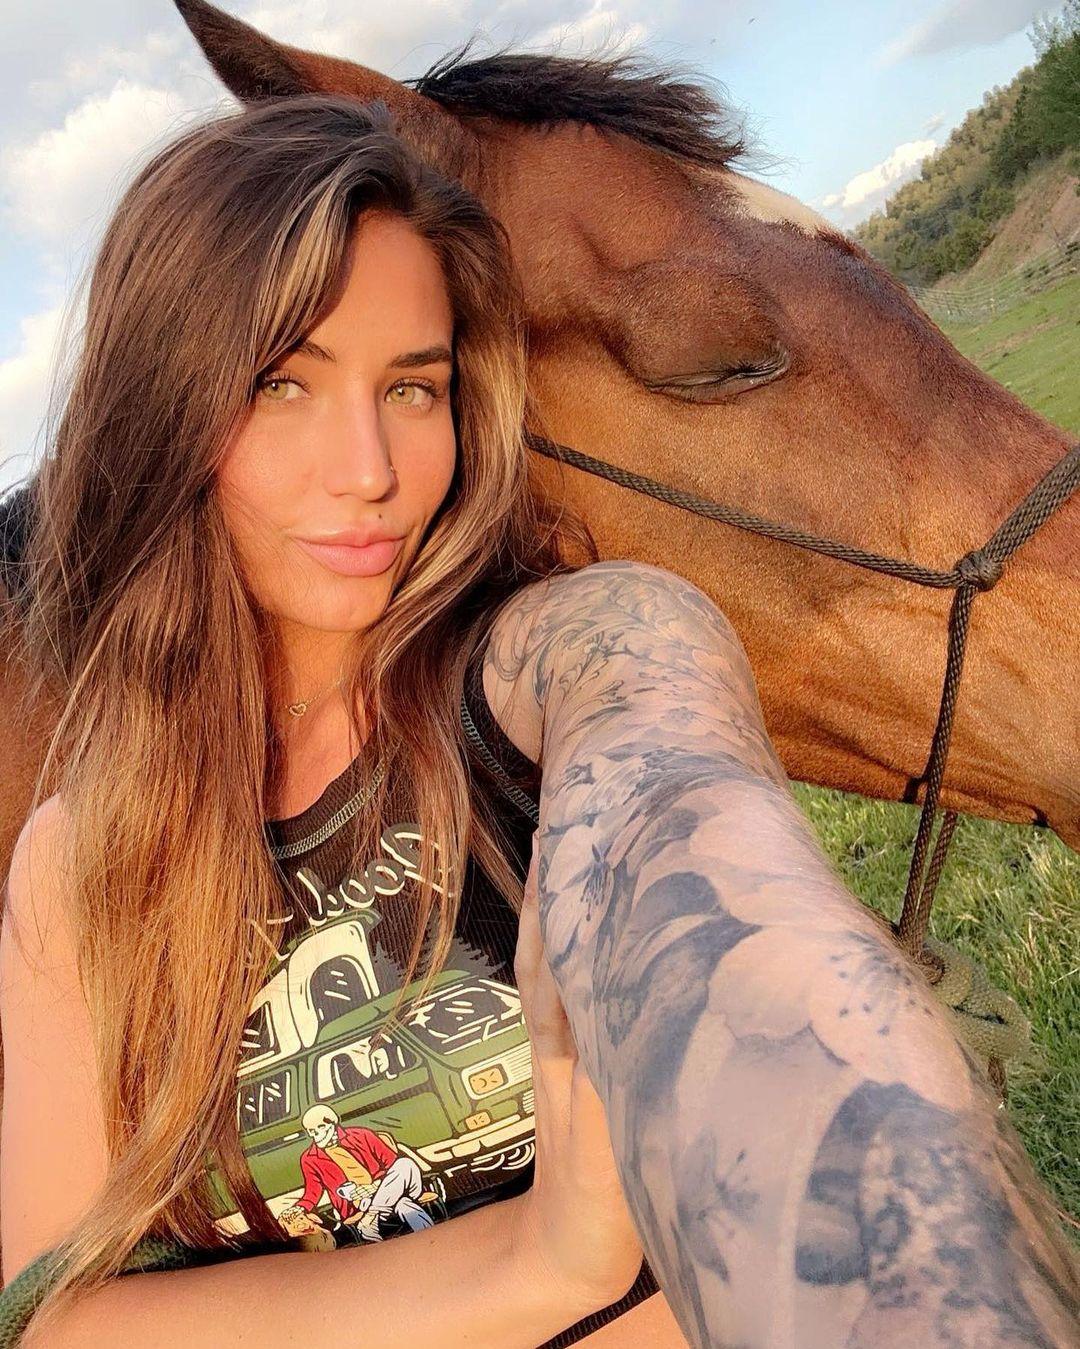 Skylyn Beaty taking a selfie with her horse.